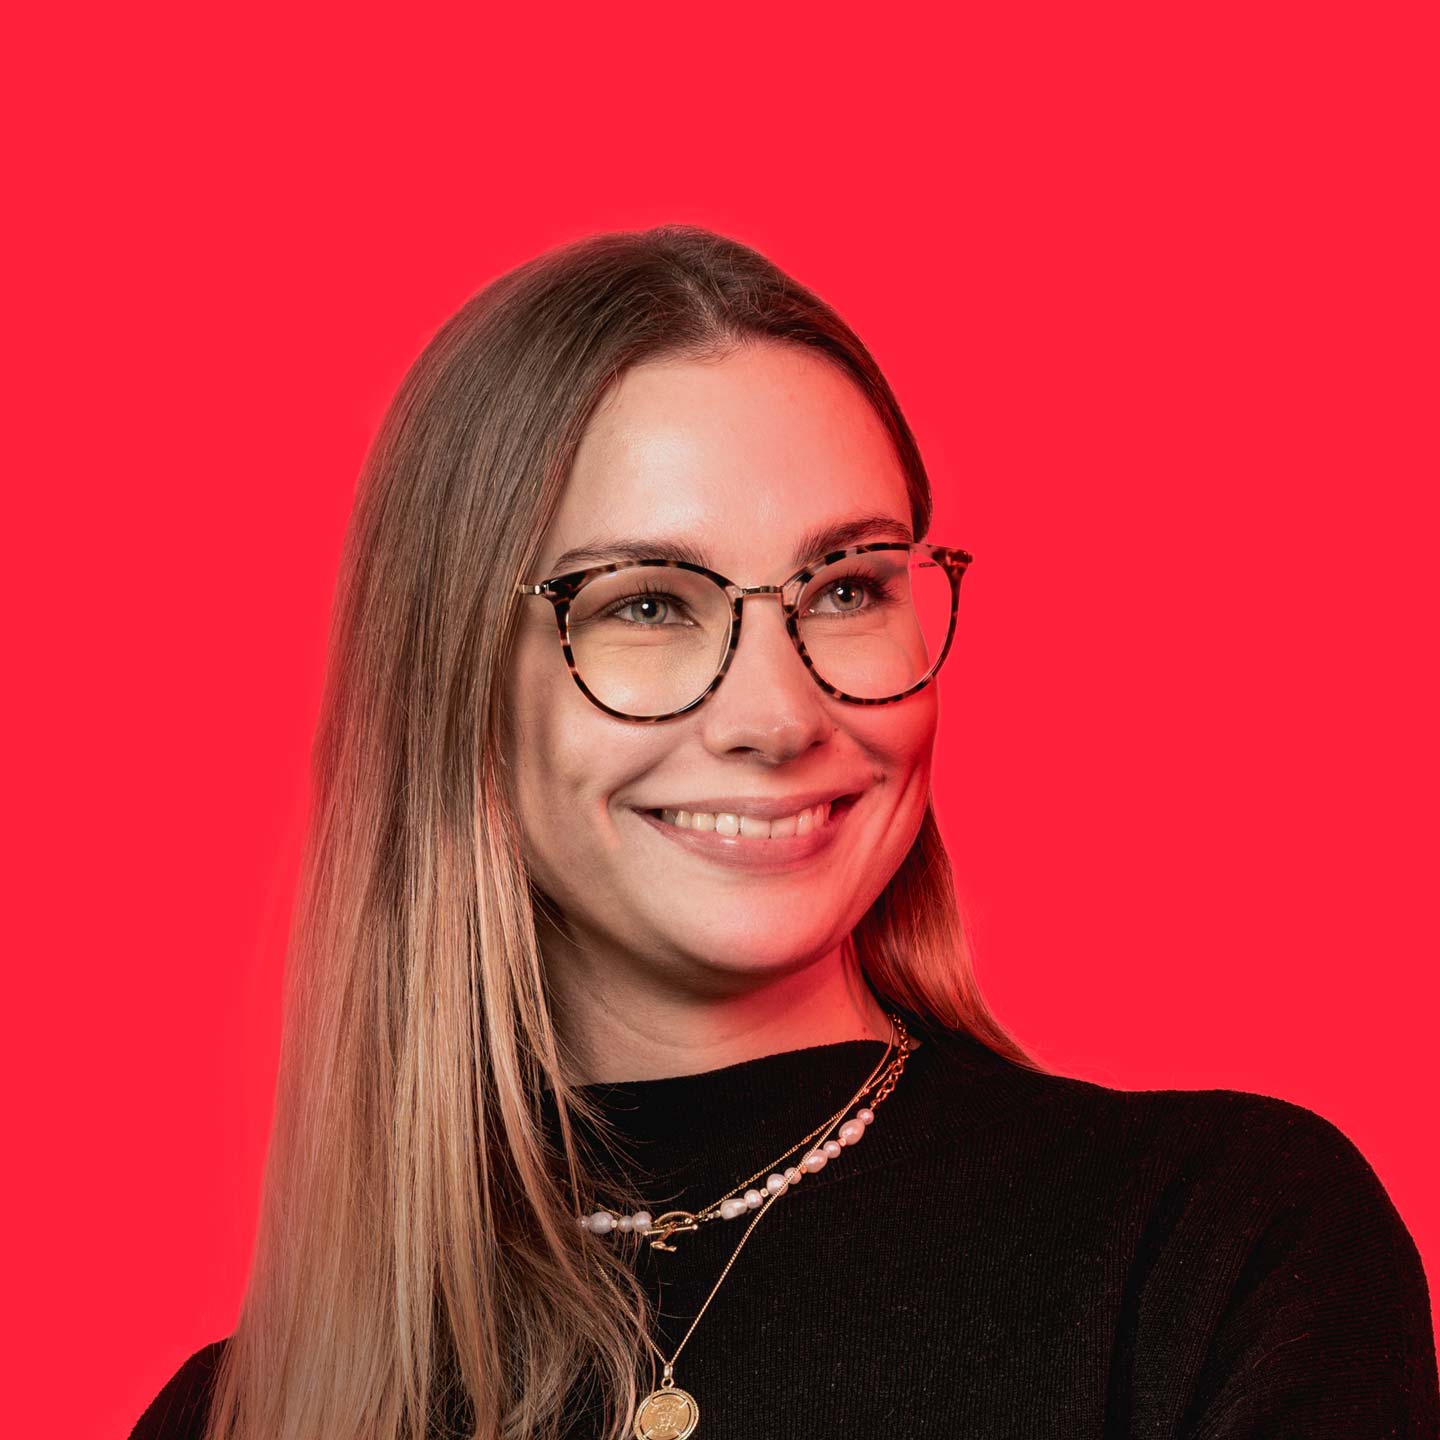 Portraitbild Lara Kreuels mit rotem Hintergrund